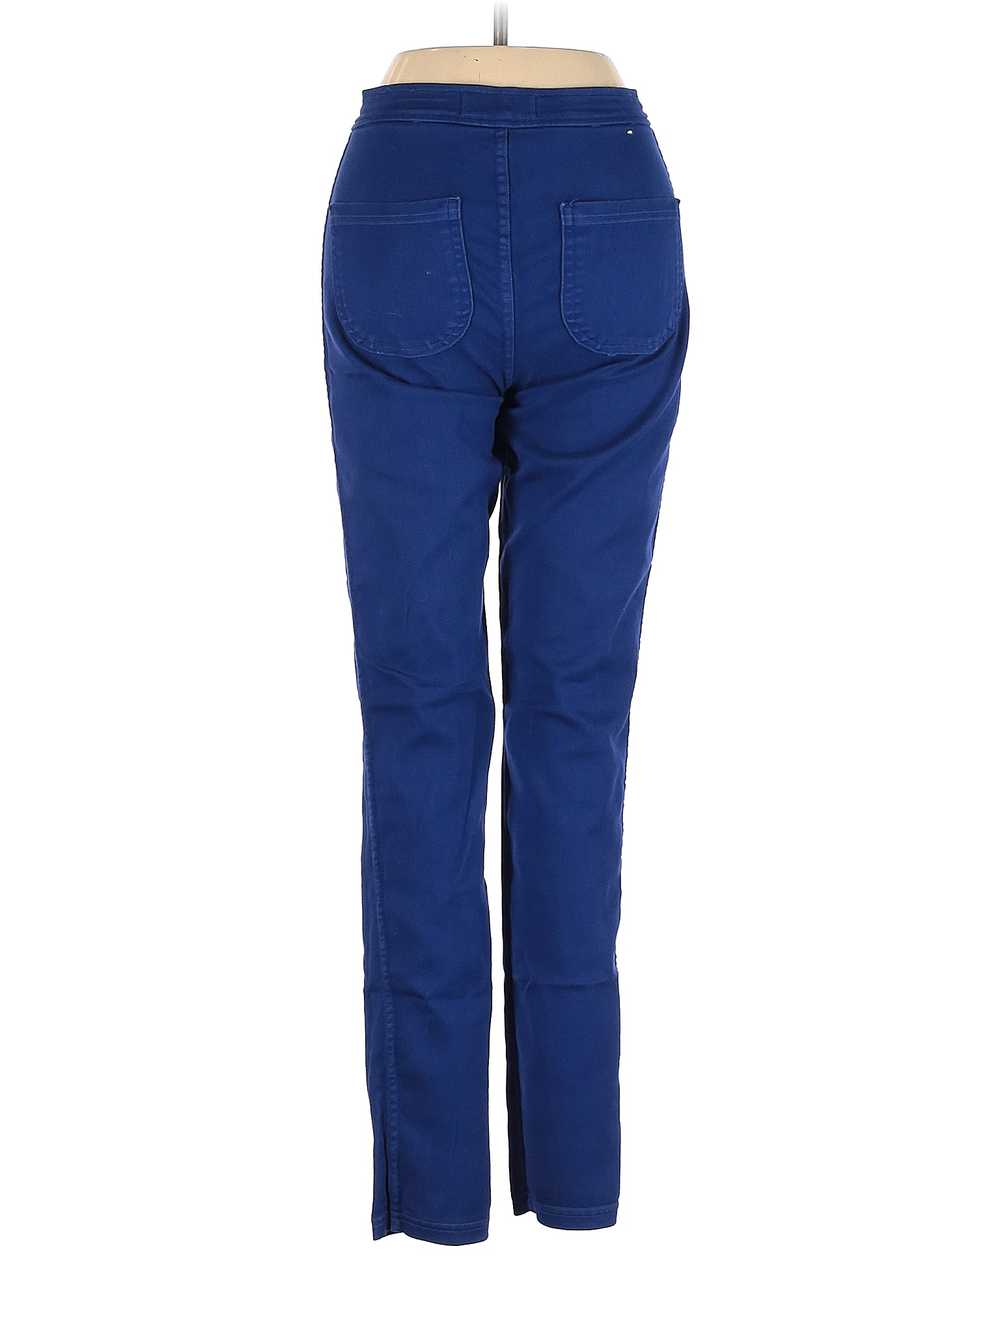 American Apparel Women Blue Jeans XXS - image 2